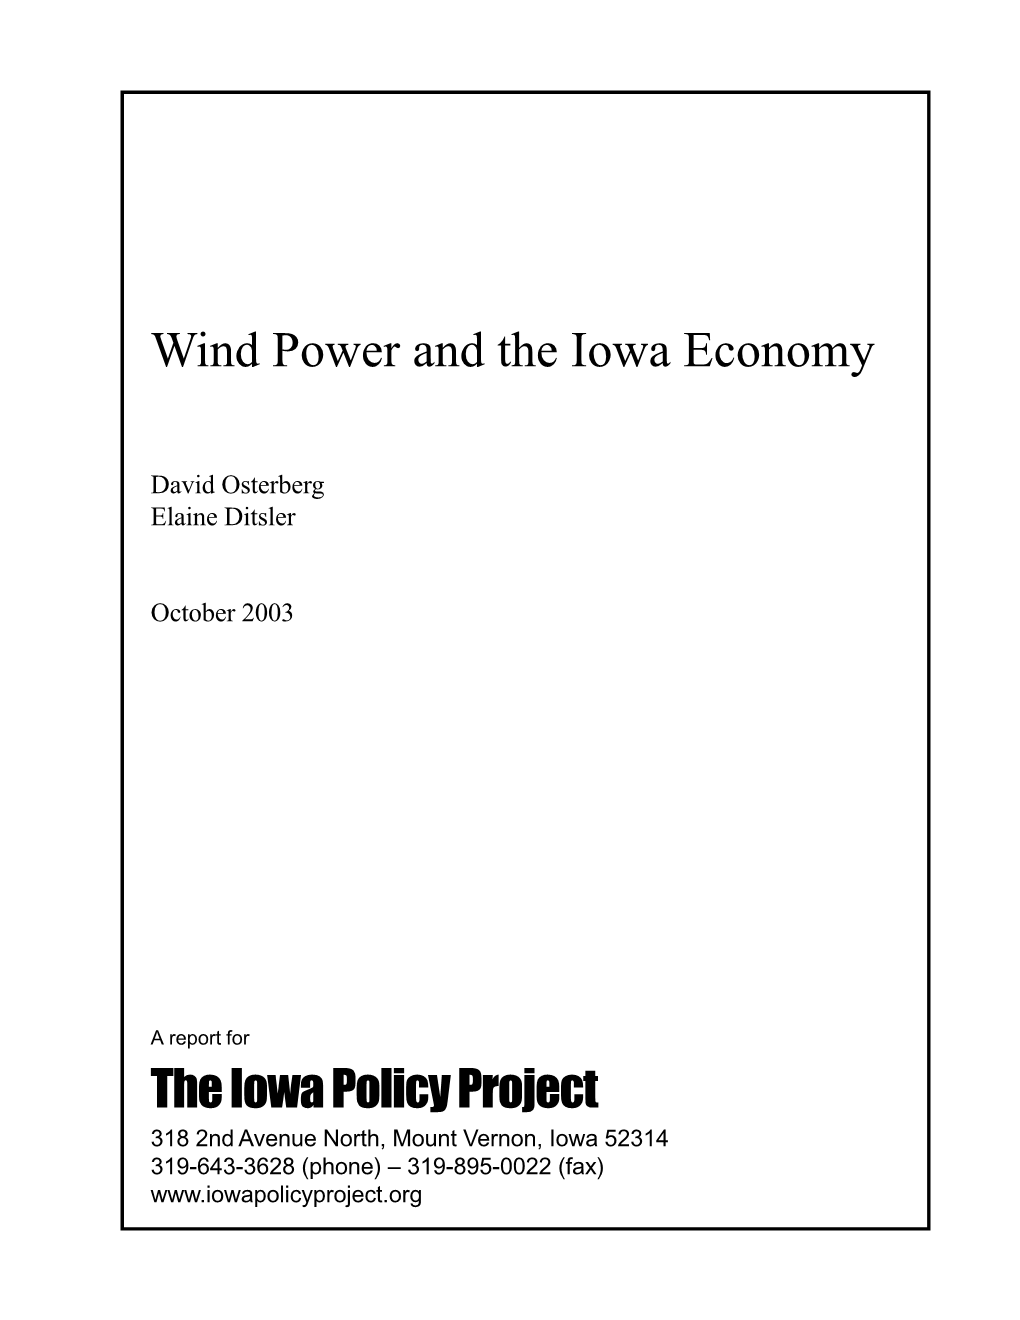 Wind Power and the Iowa Economy the Iowa Policy Project